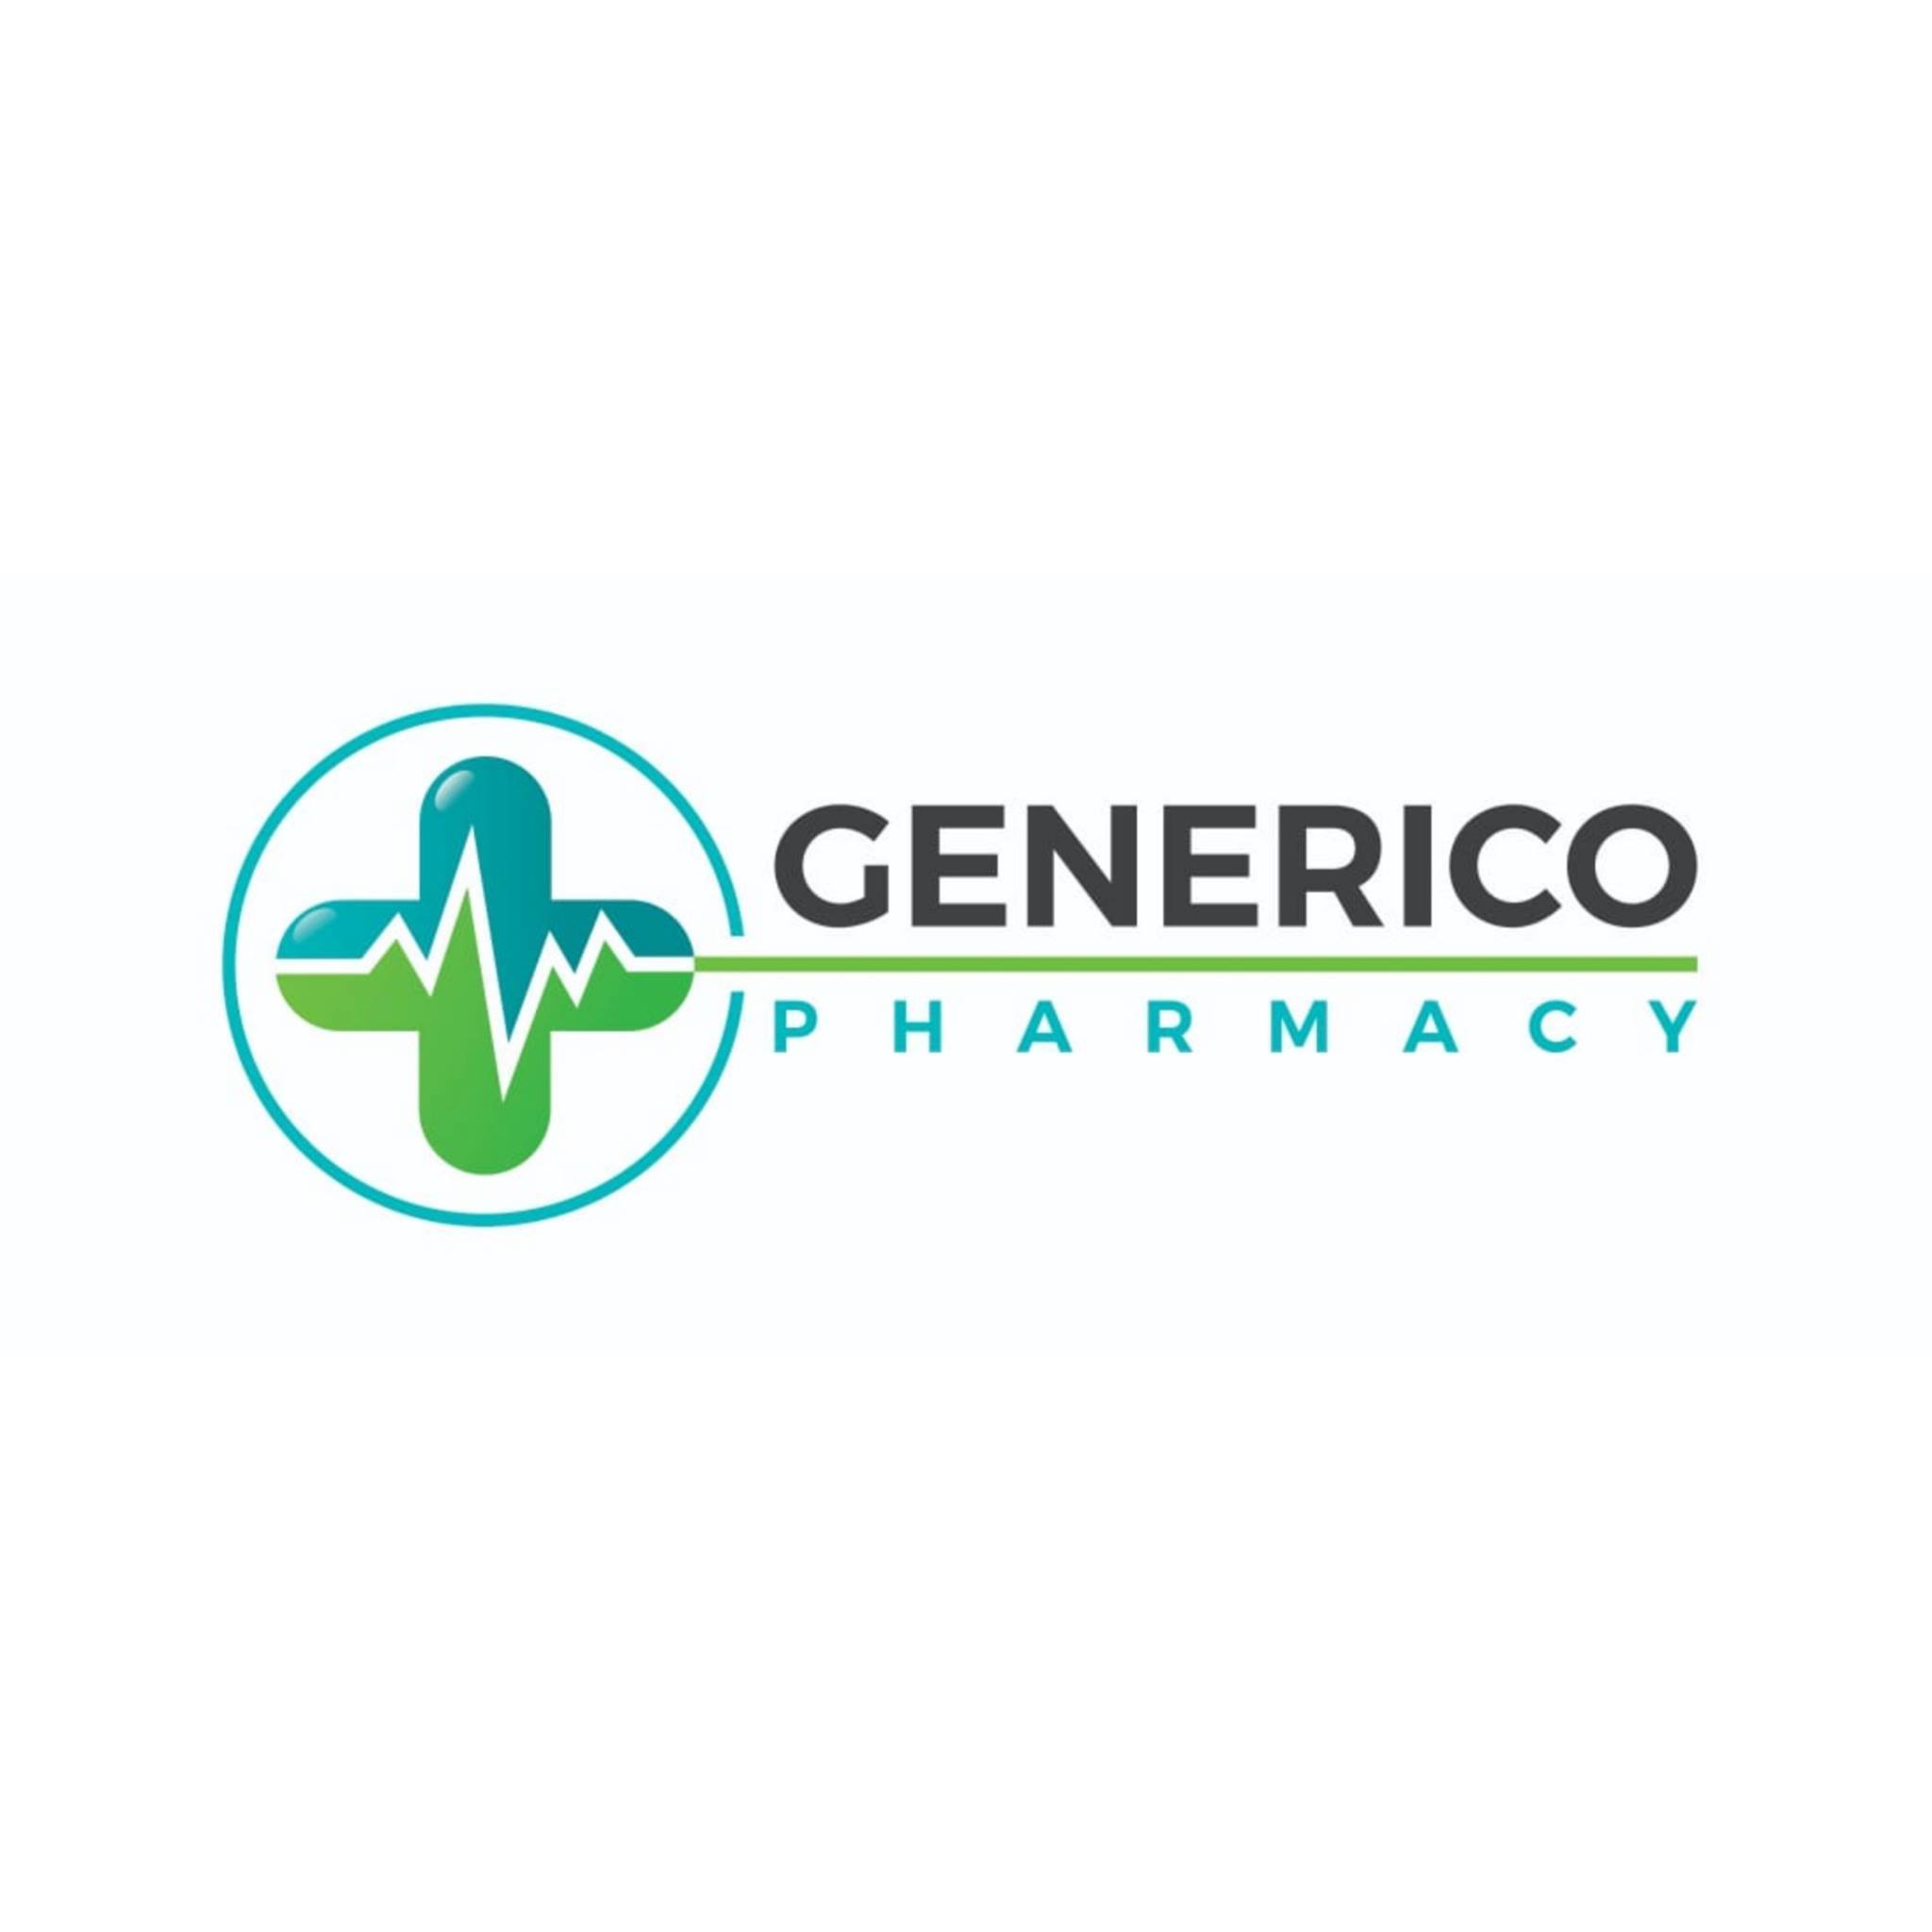 Generico Pharmacy Nepal Pvt. Ltd